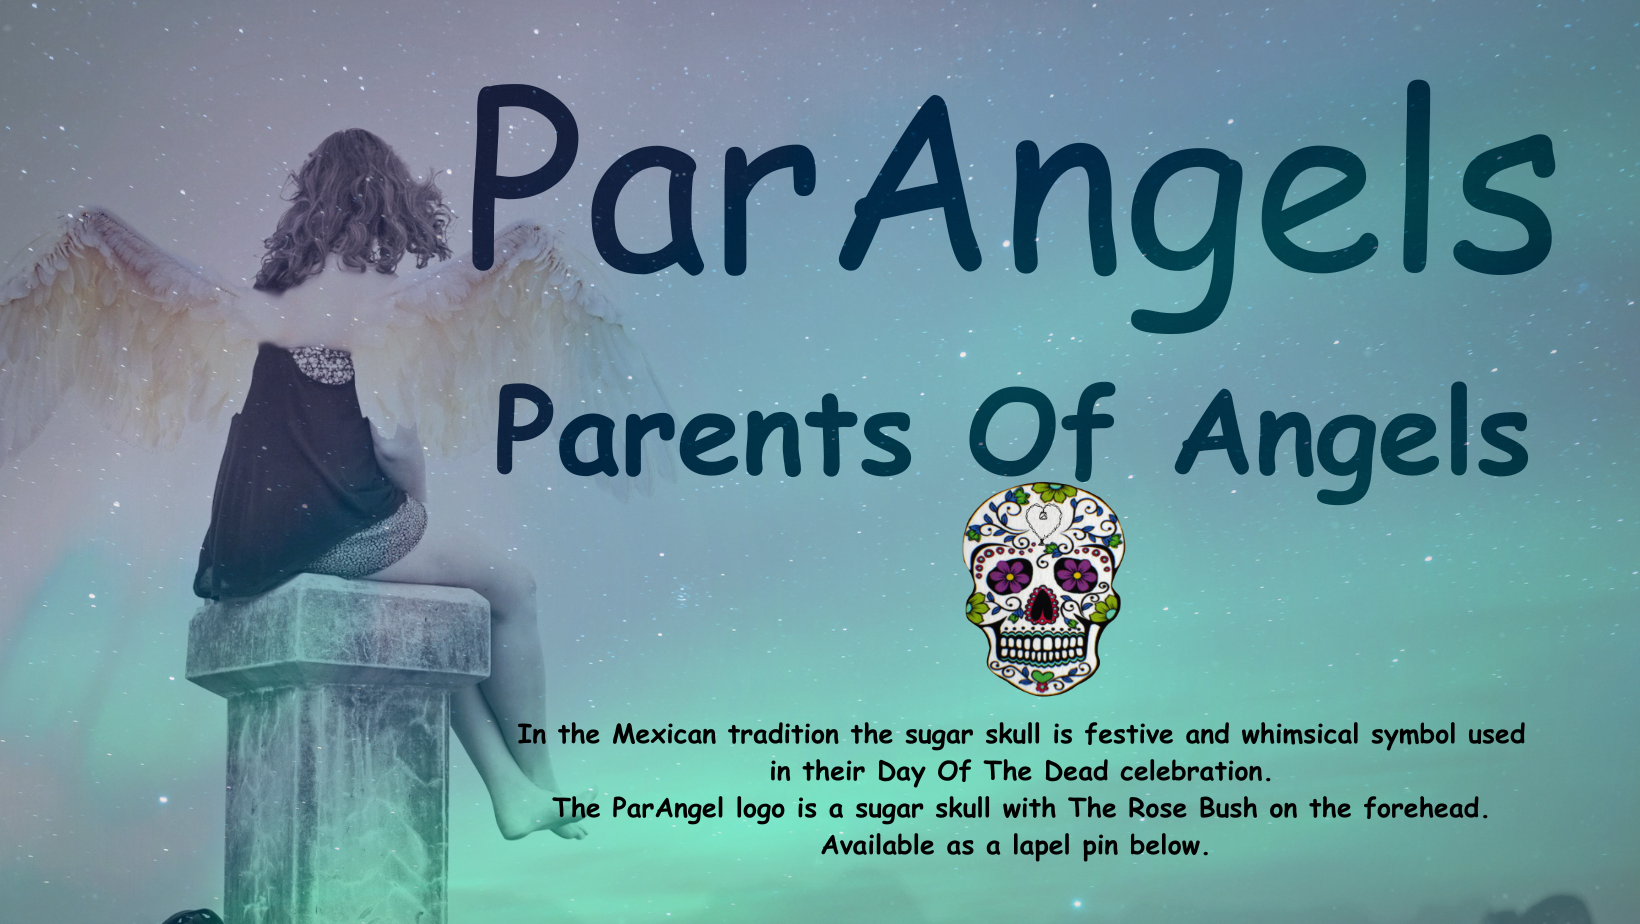 ParAngels are Parents of Angels